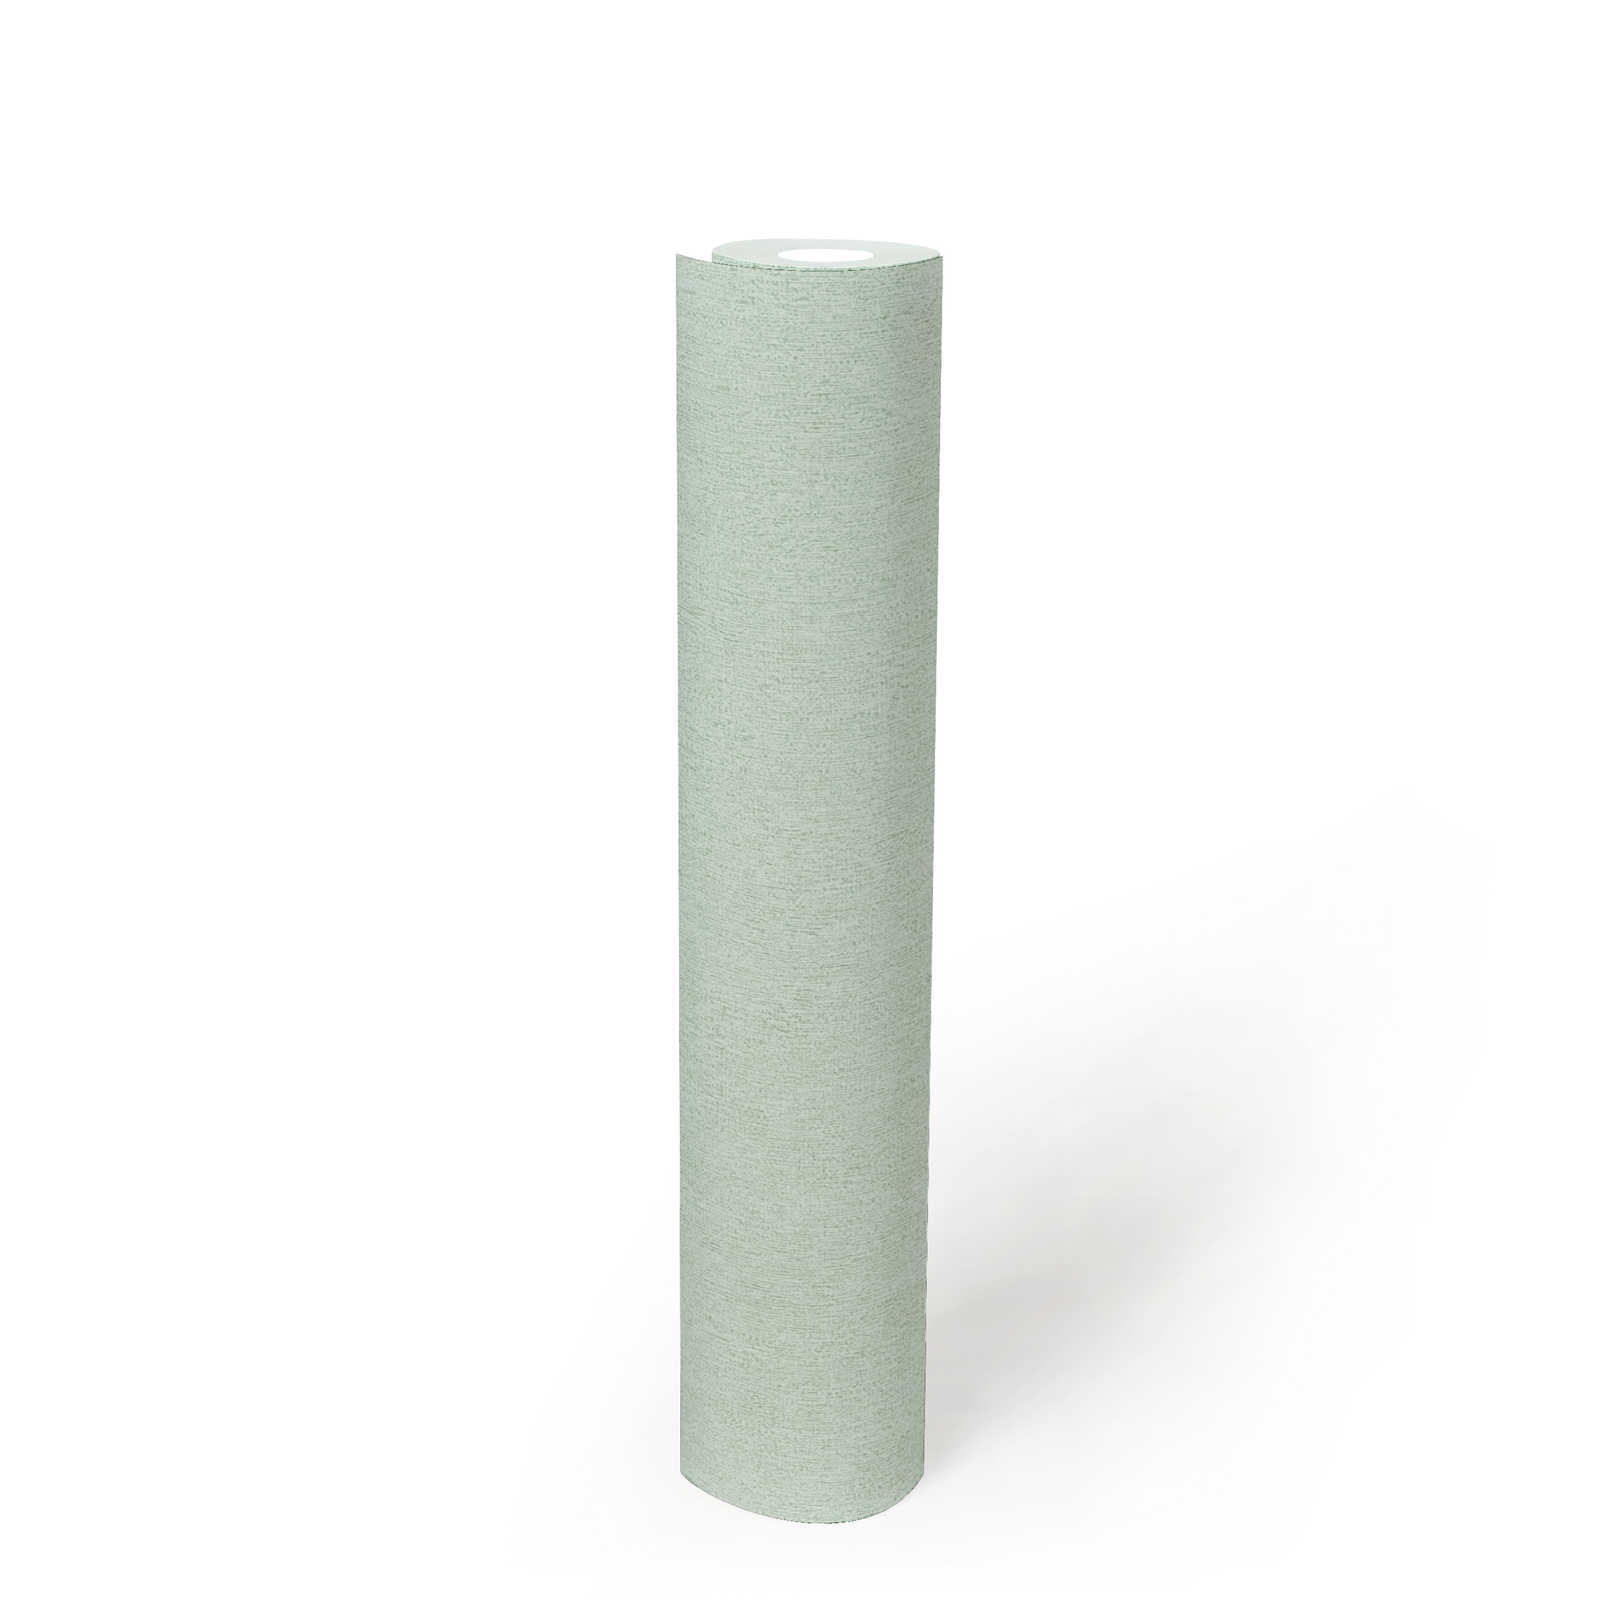             Vliestapete in matt & glatt mit Struktur Muster – Grün
        